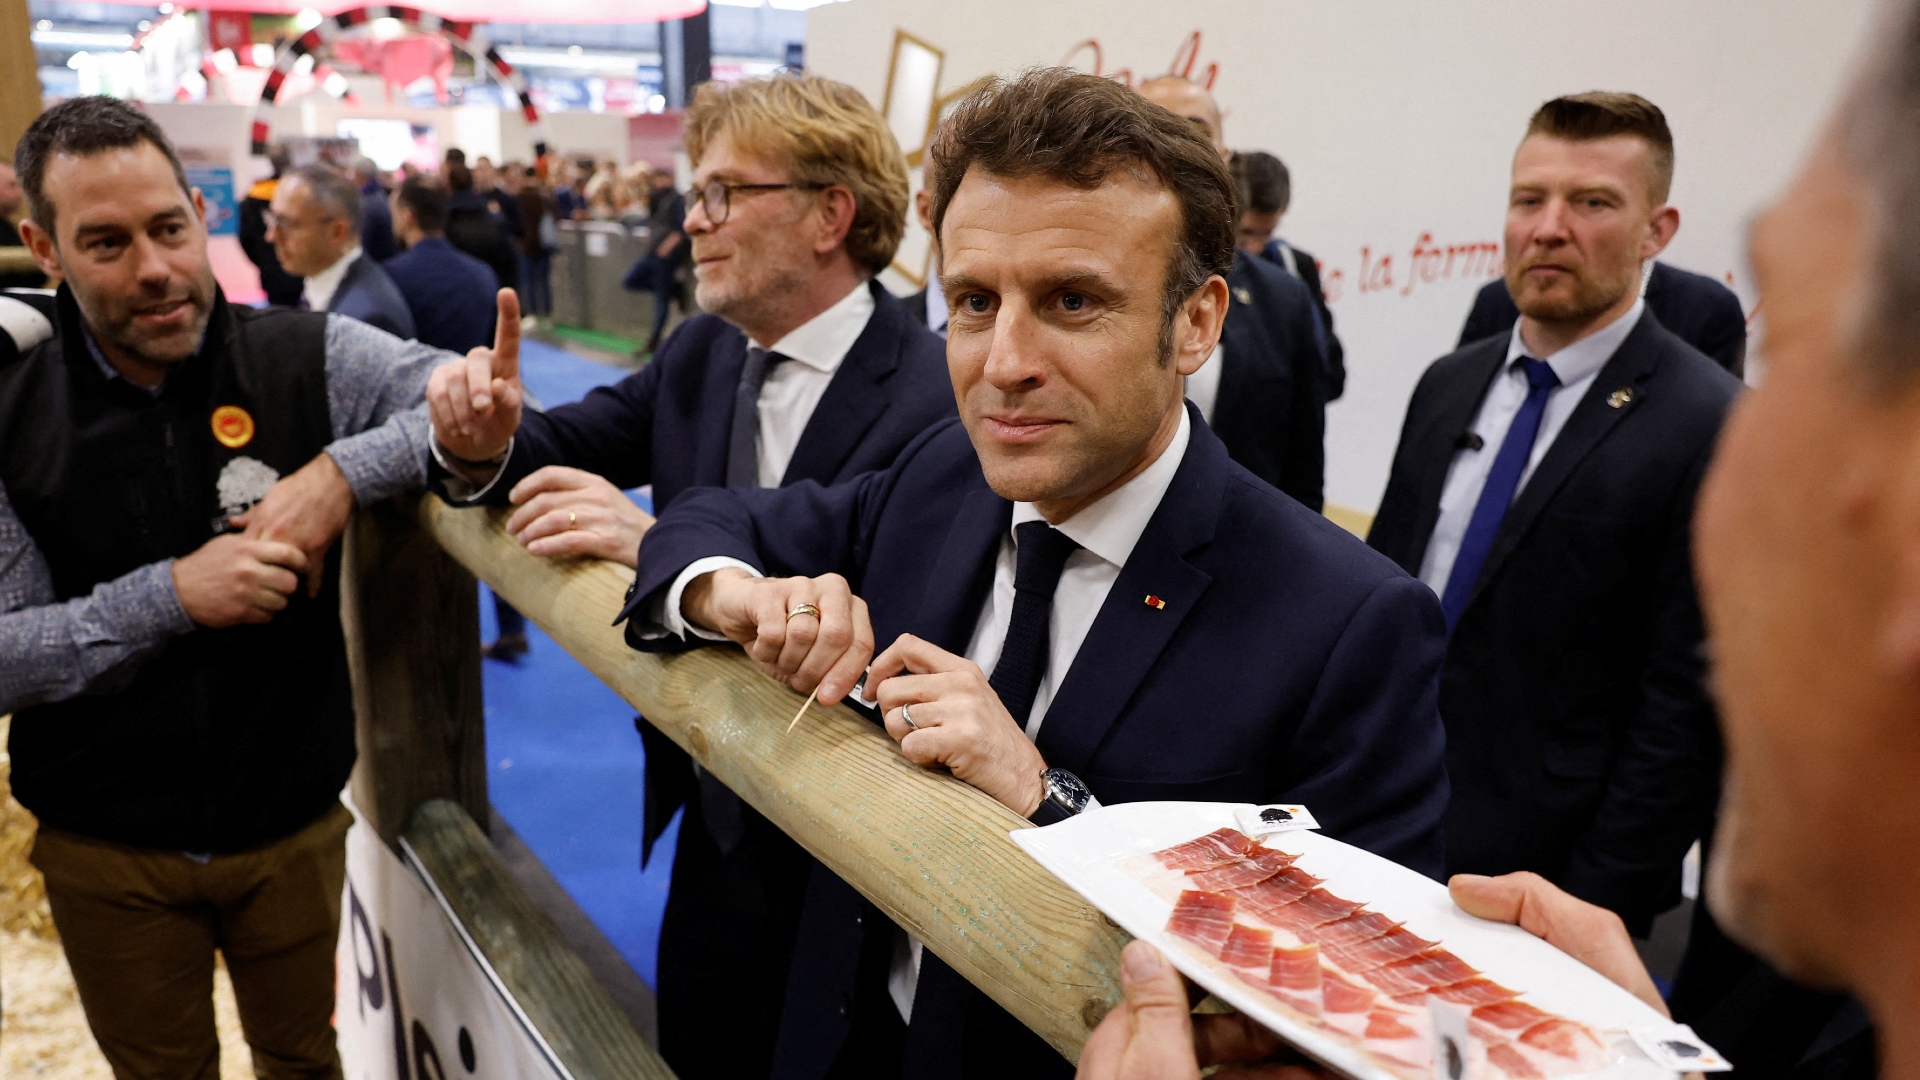 Macron made the announcement during an annual trip to the Paris Agriculture Show./Christian Hartmann/AFP